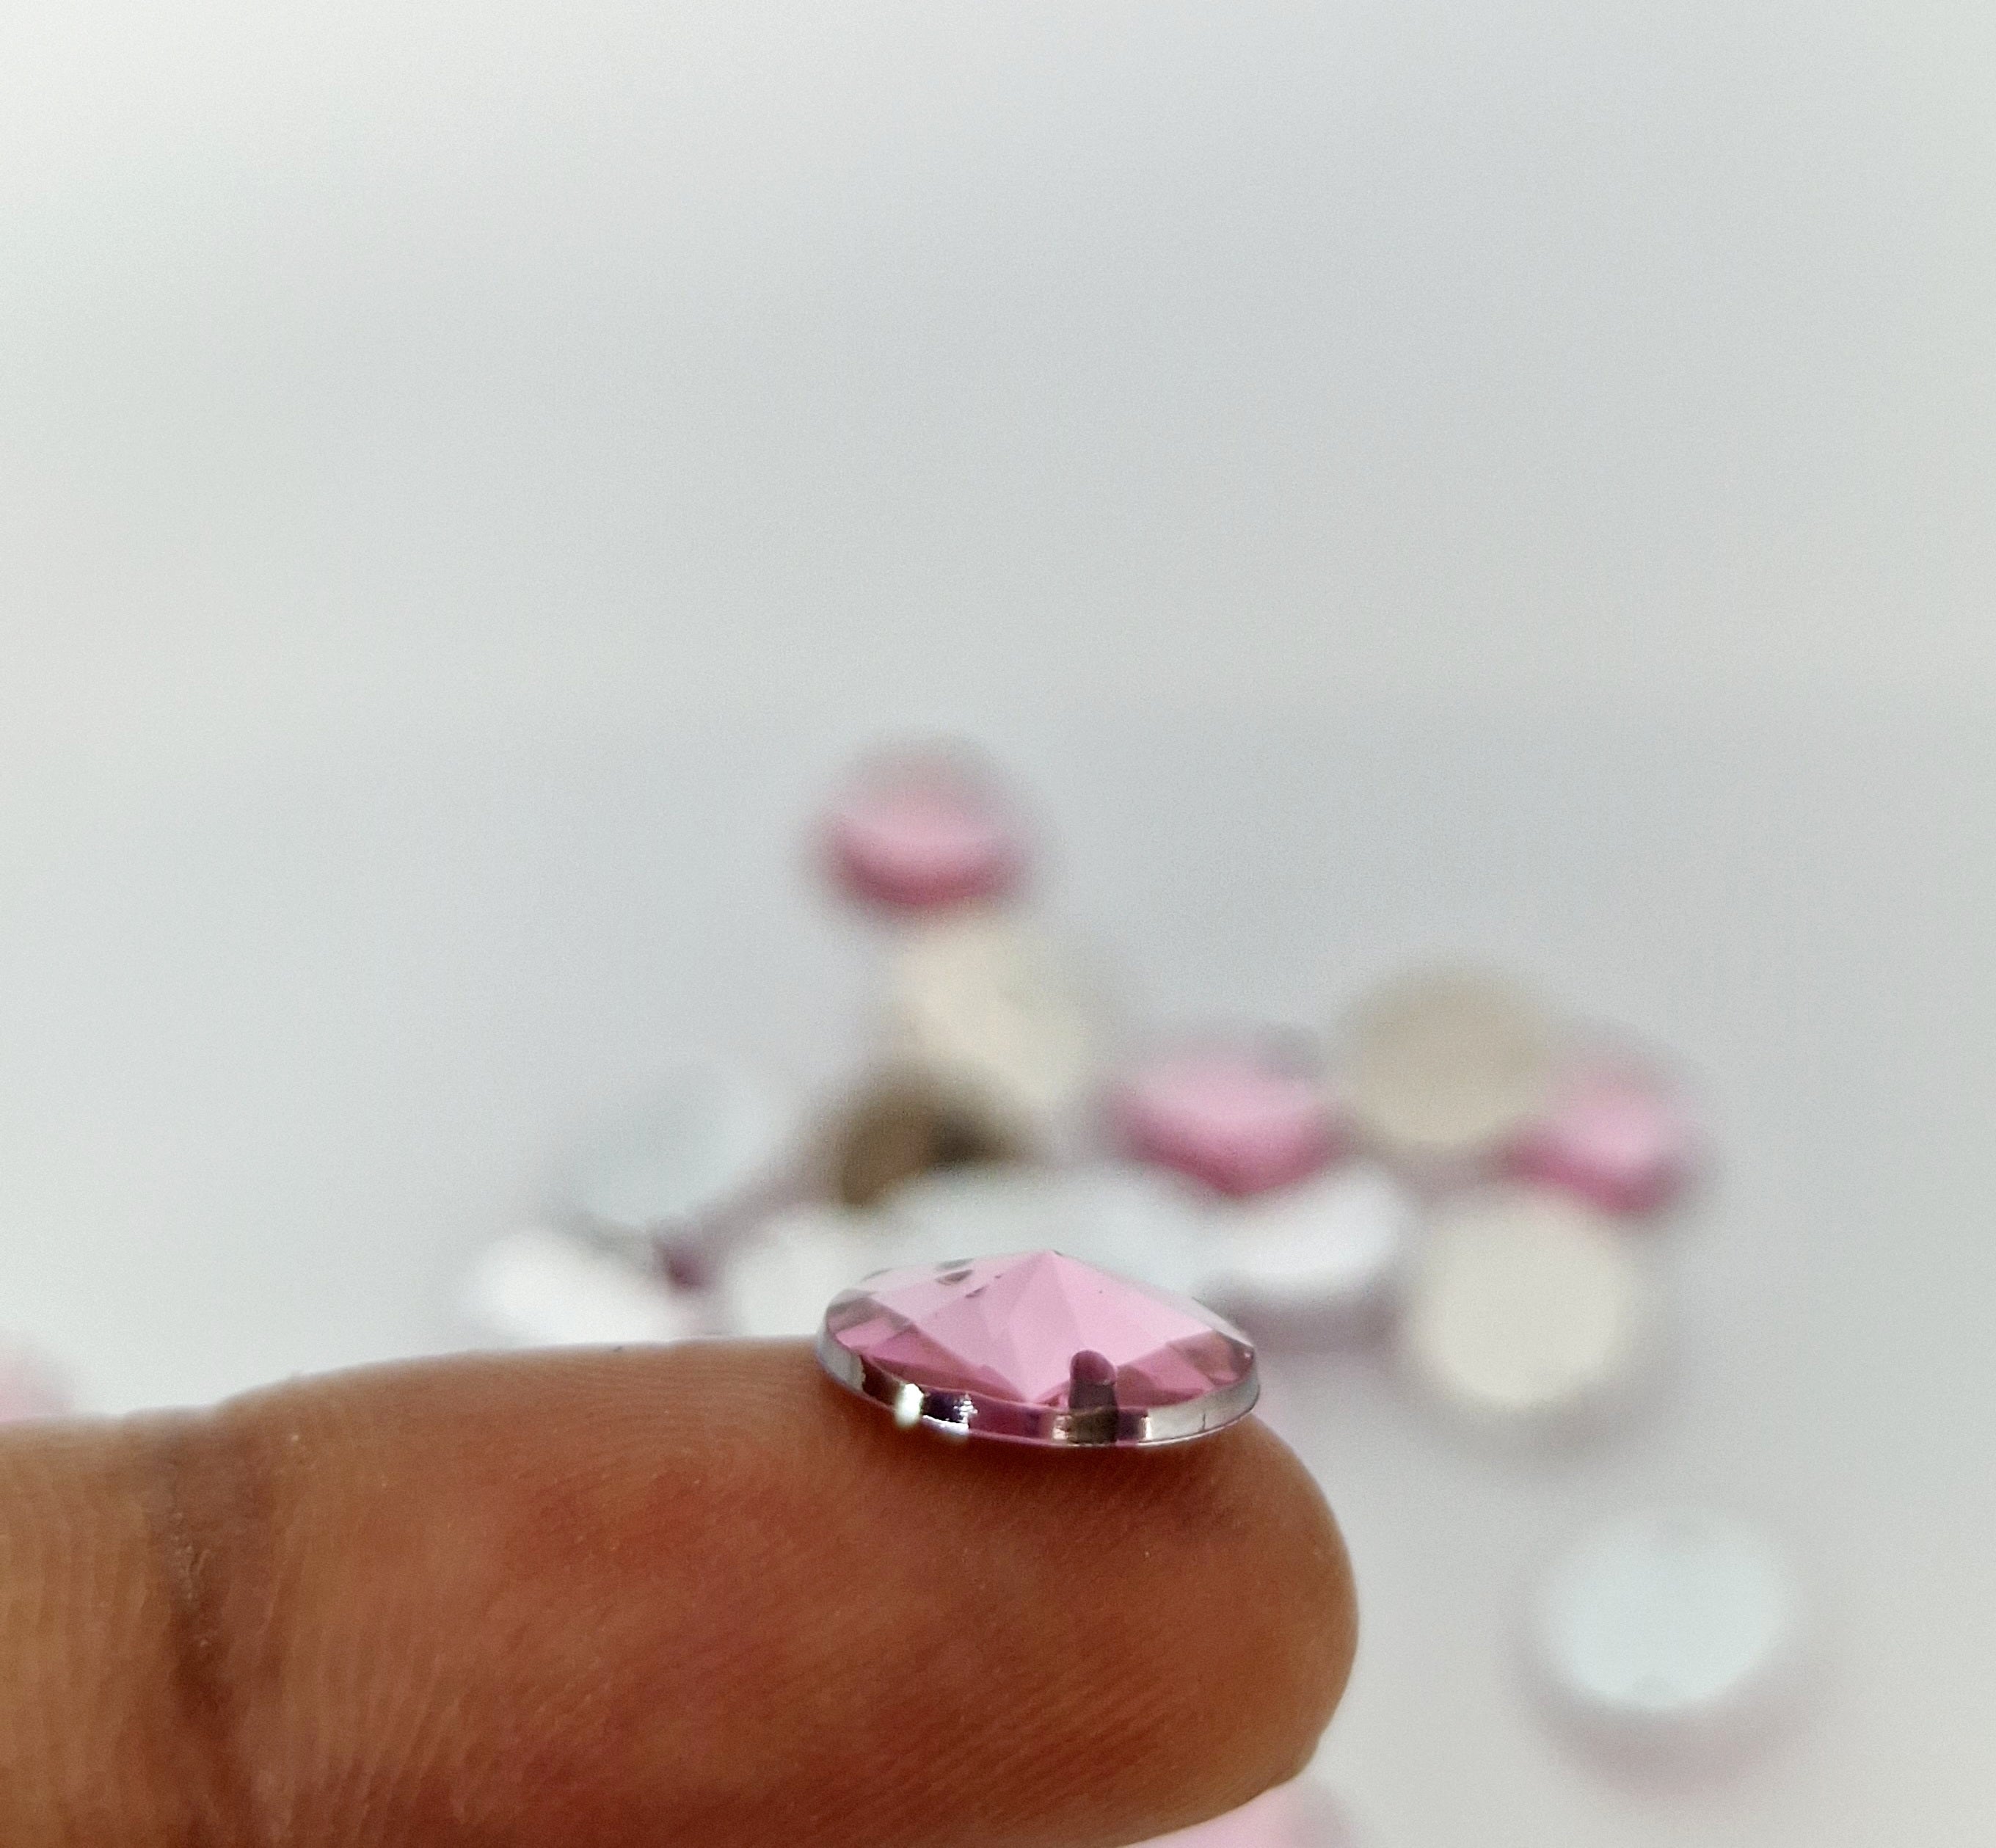 MajorCrafts 120pcs 10mm Light Pink Round Pointed Acrylic Sewing Rhinestones